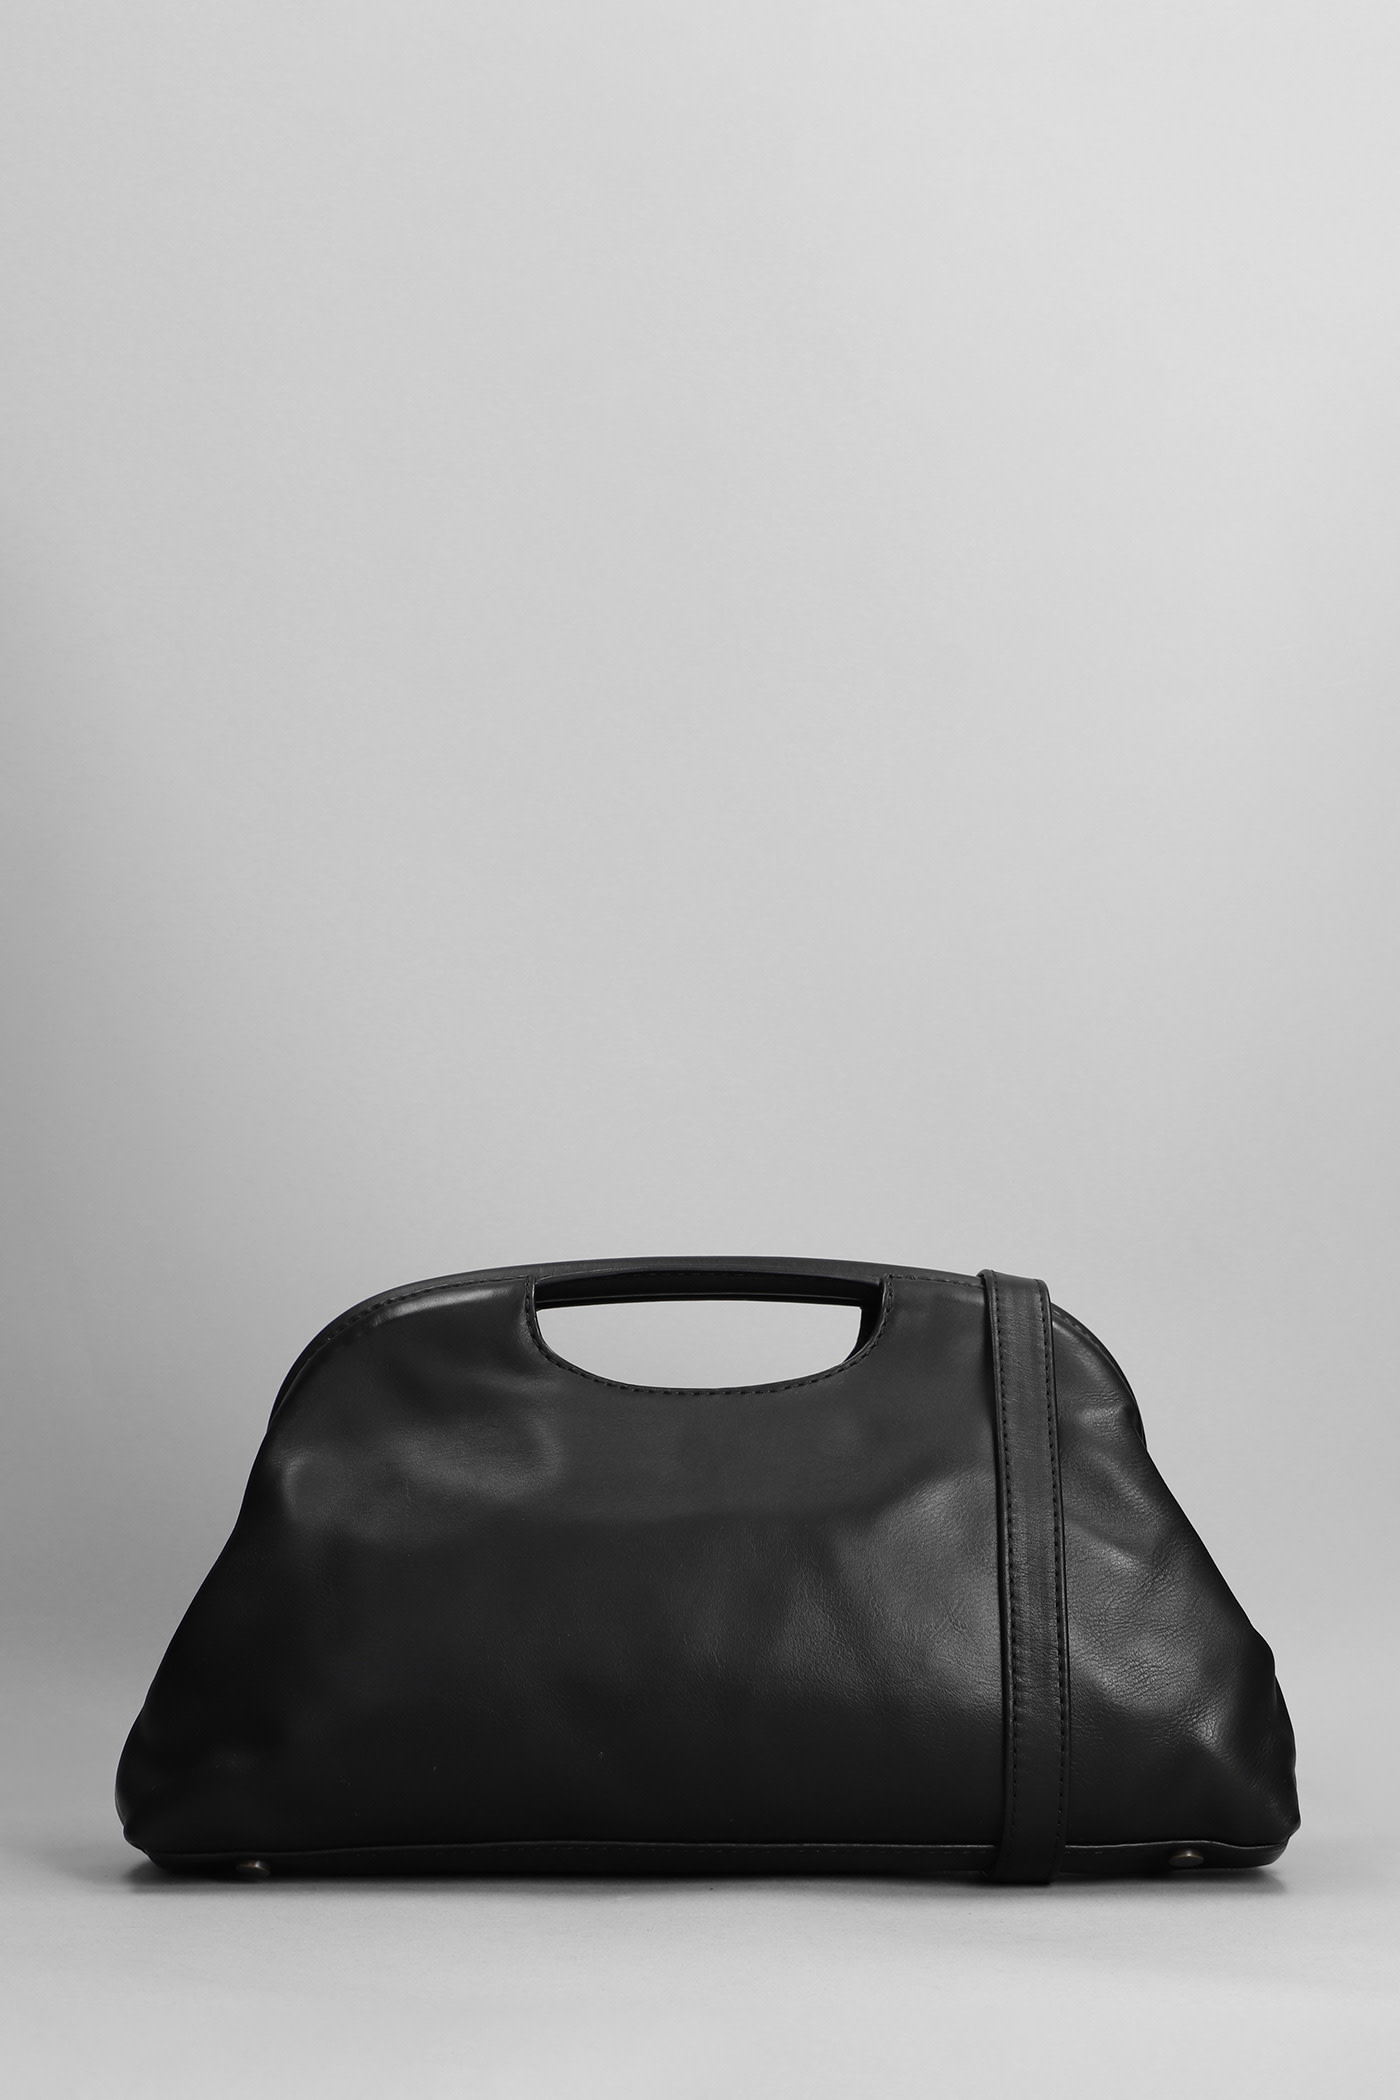 Officine Creative Helen 020 Hand Bag In Black Leather